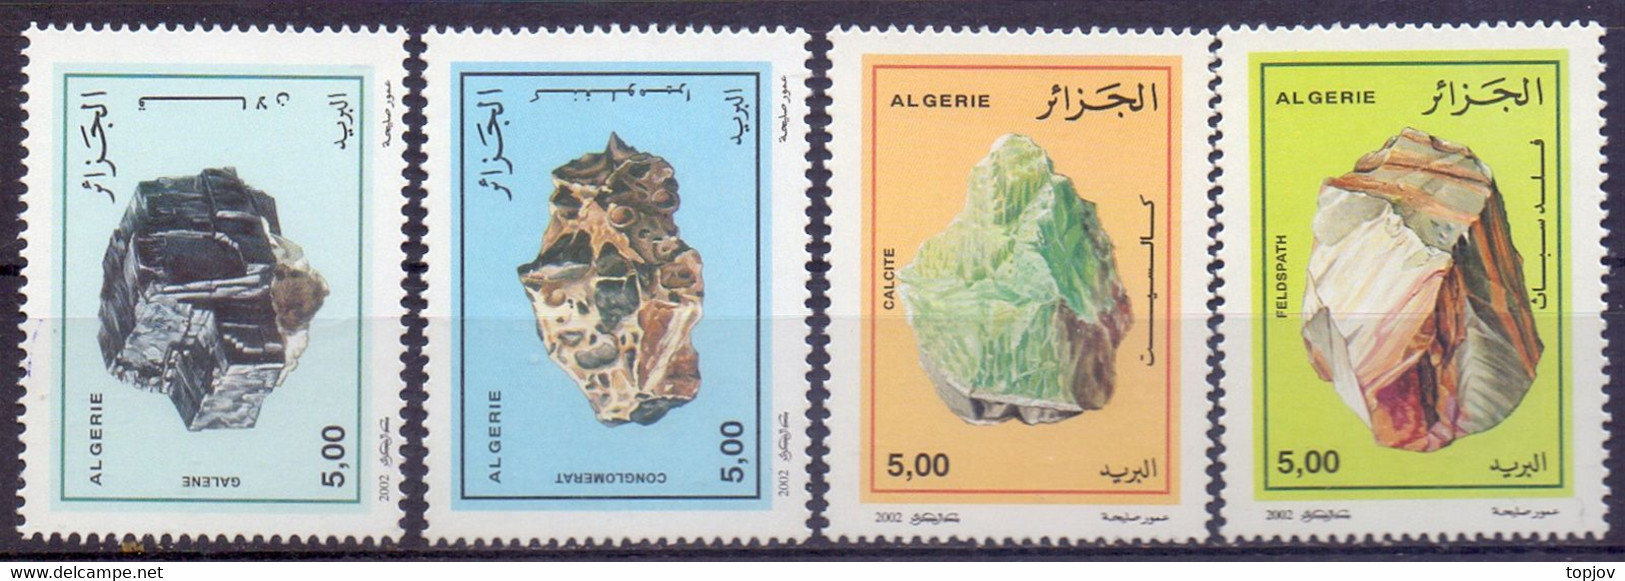 ALGERIE - MINERALES - GEMSTONES - **MNH - 2002 - Minéraux